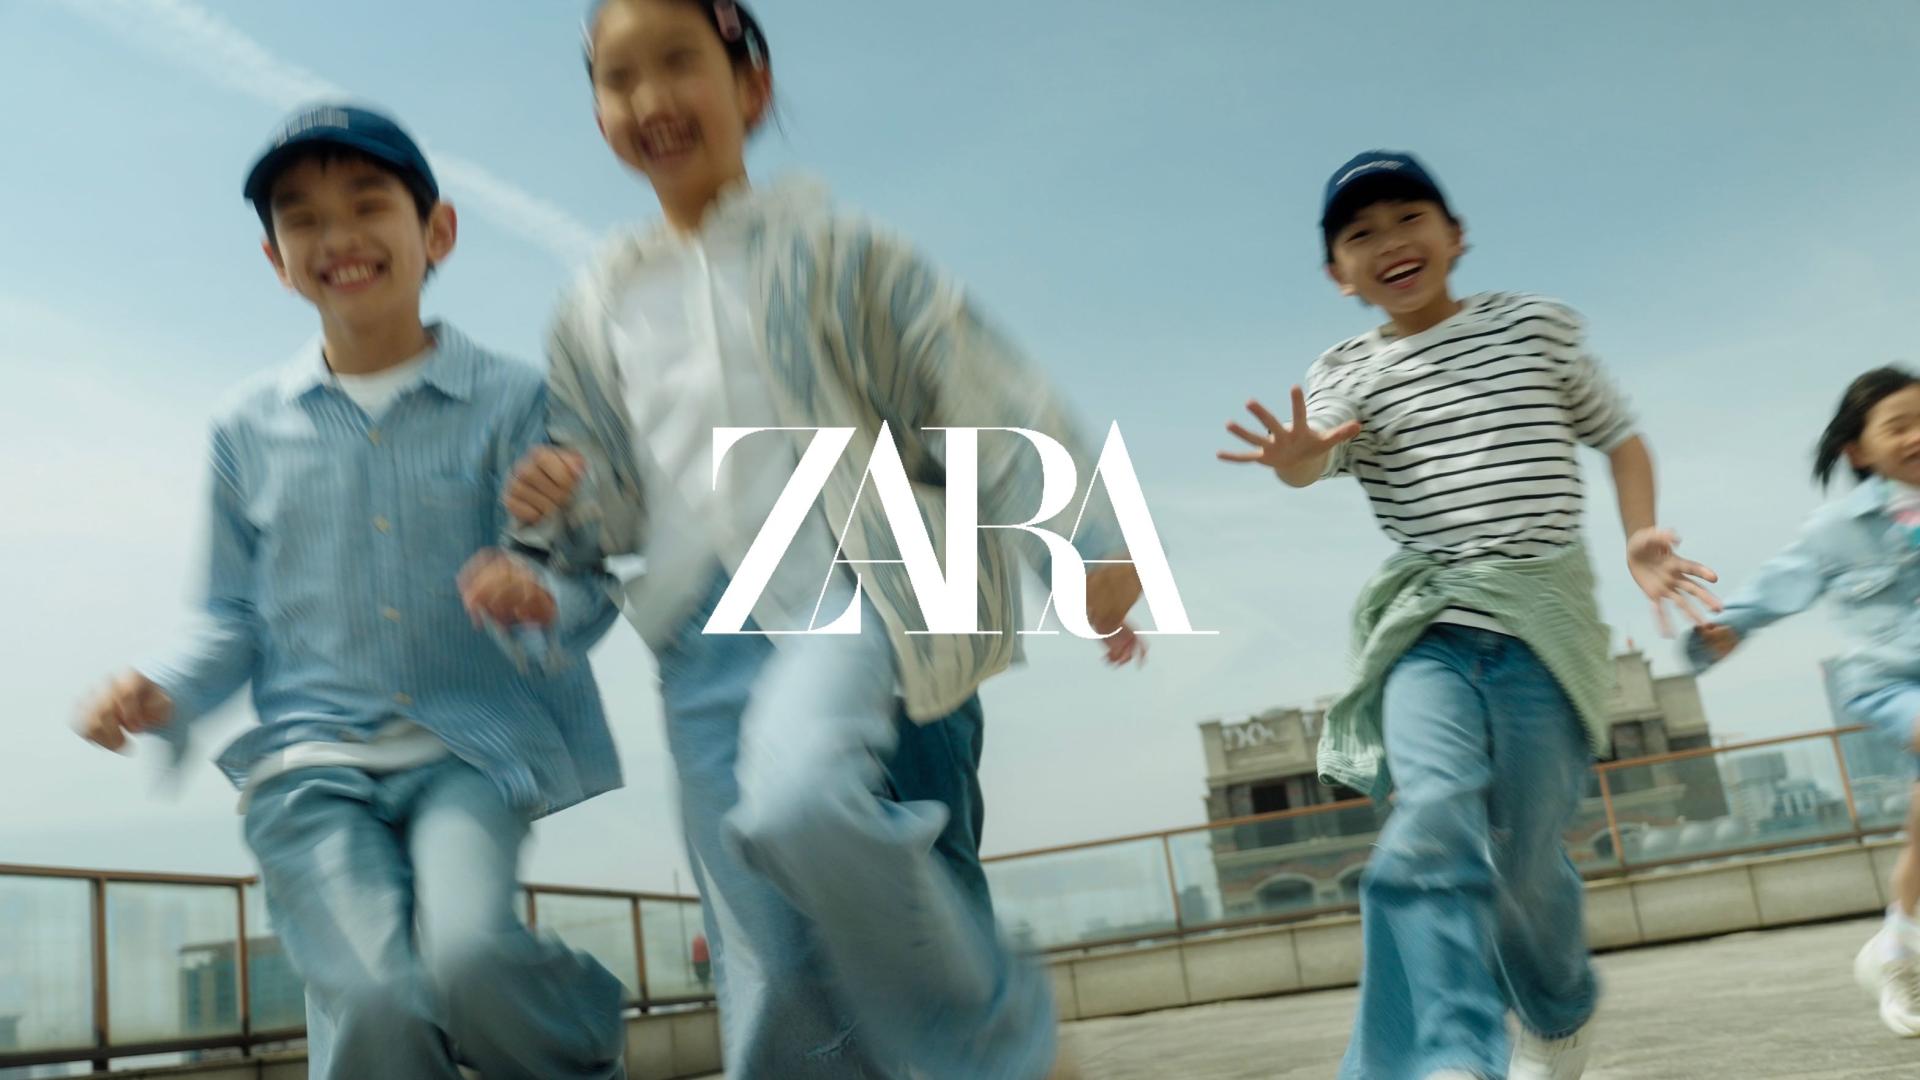 ZARA/family time-Dir